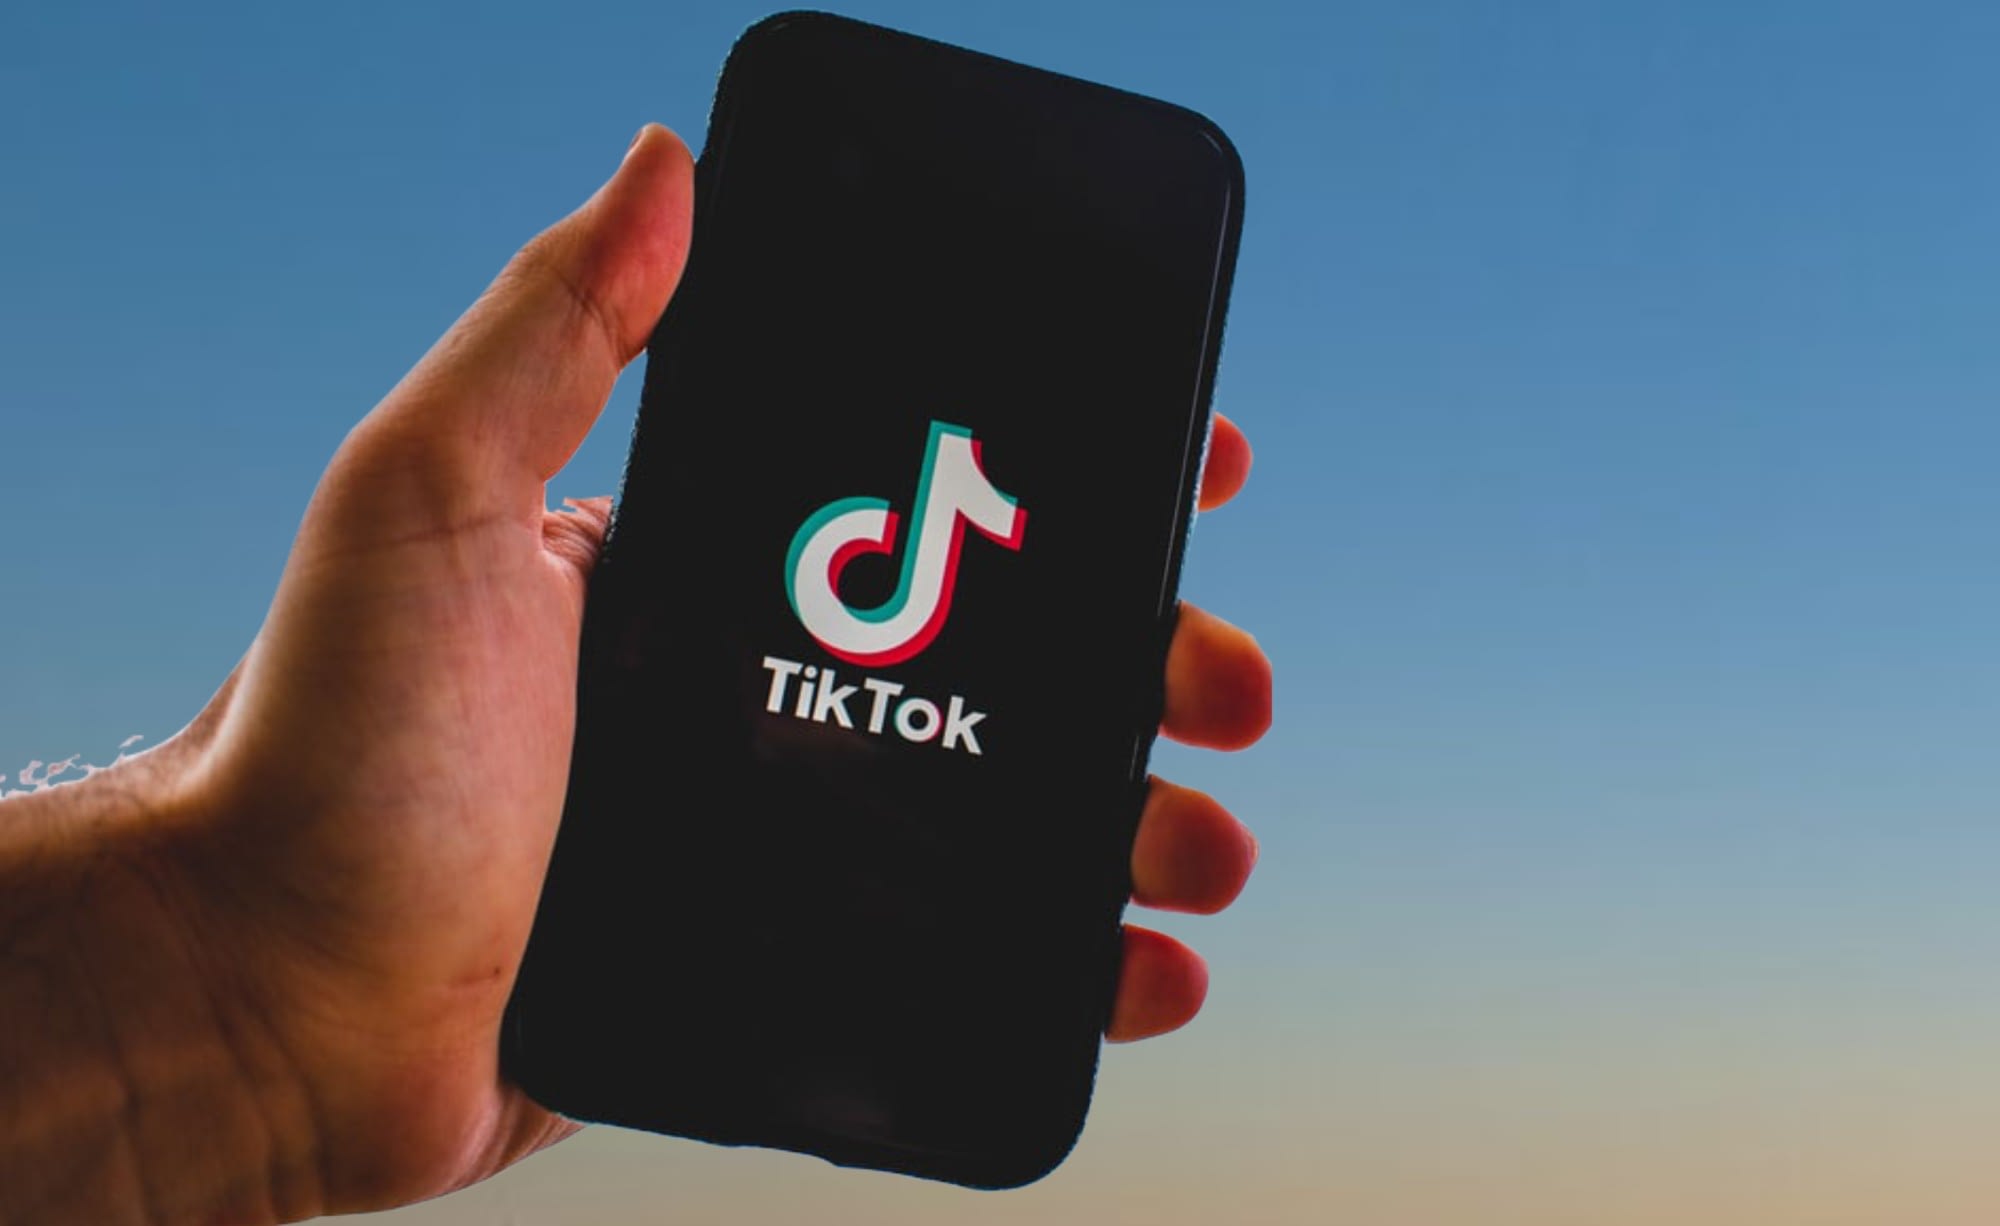 TikTok Marketing for your business